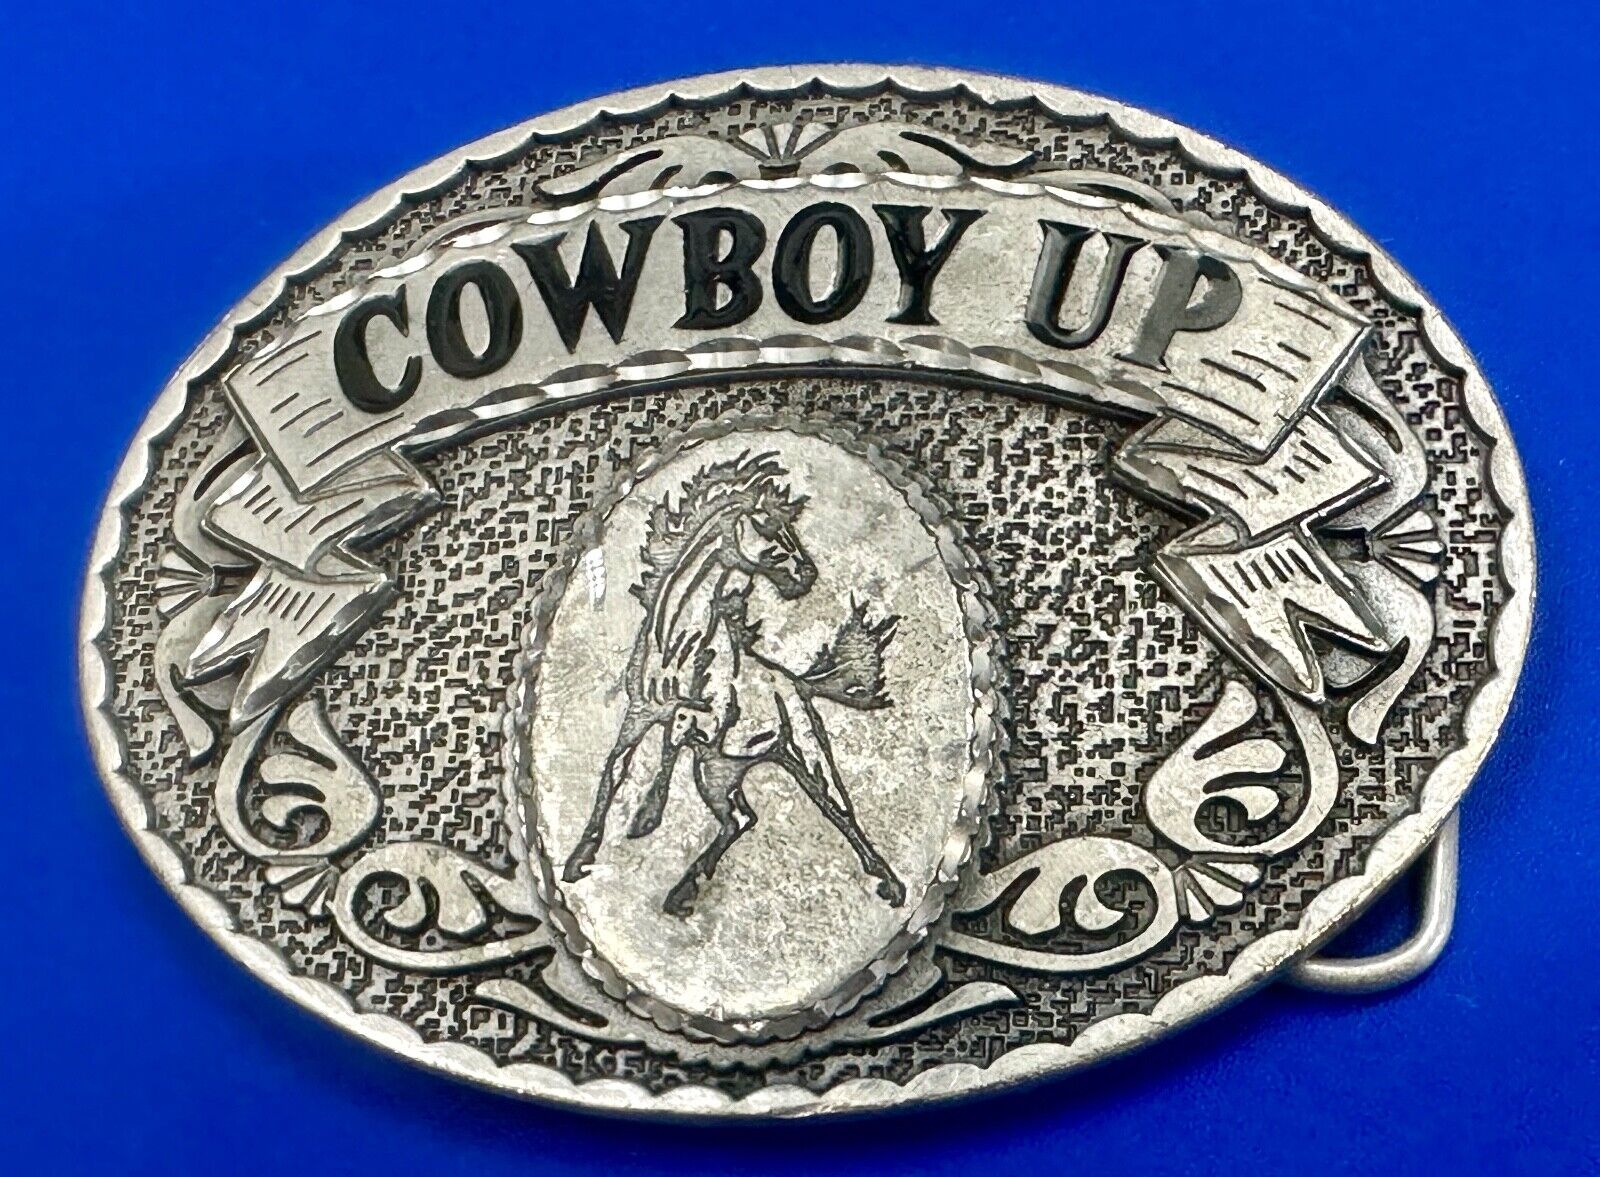 COWBOY UP - A way of life western belt buckle Legends West 2007 SP Bb2004